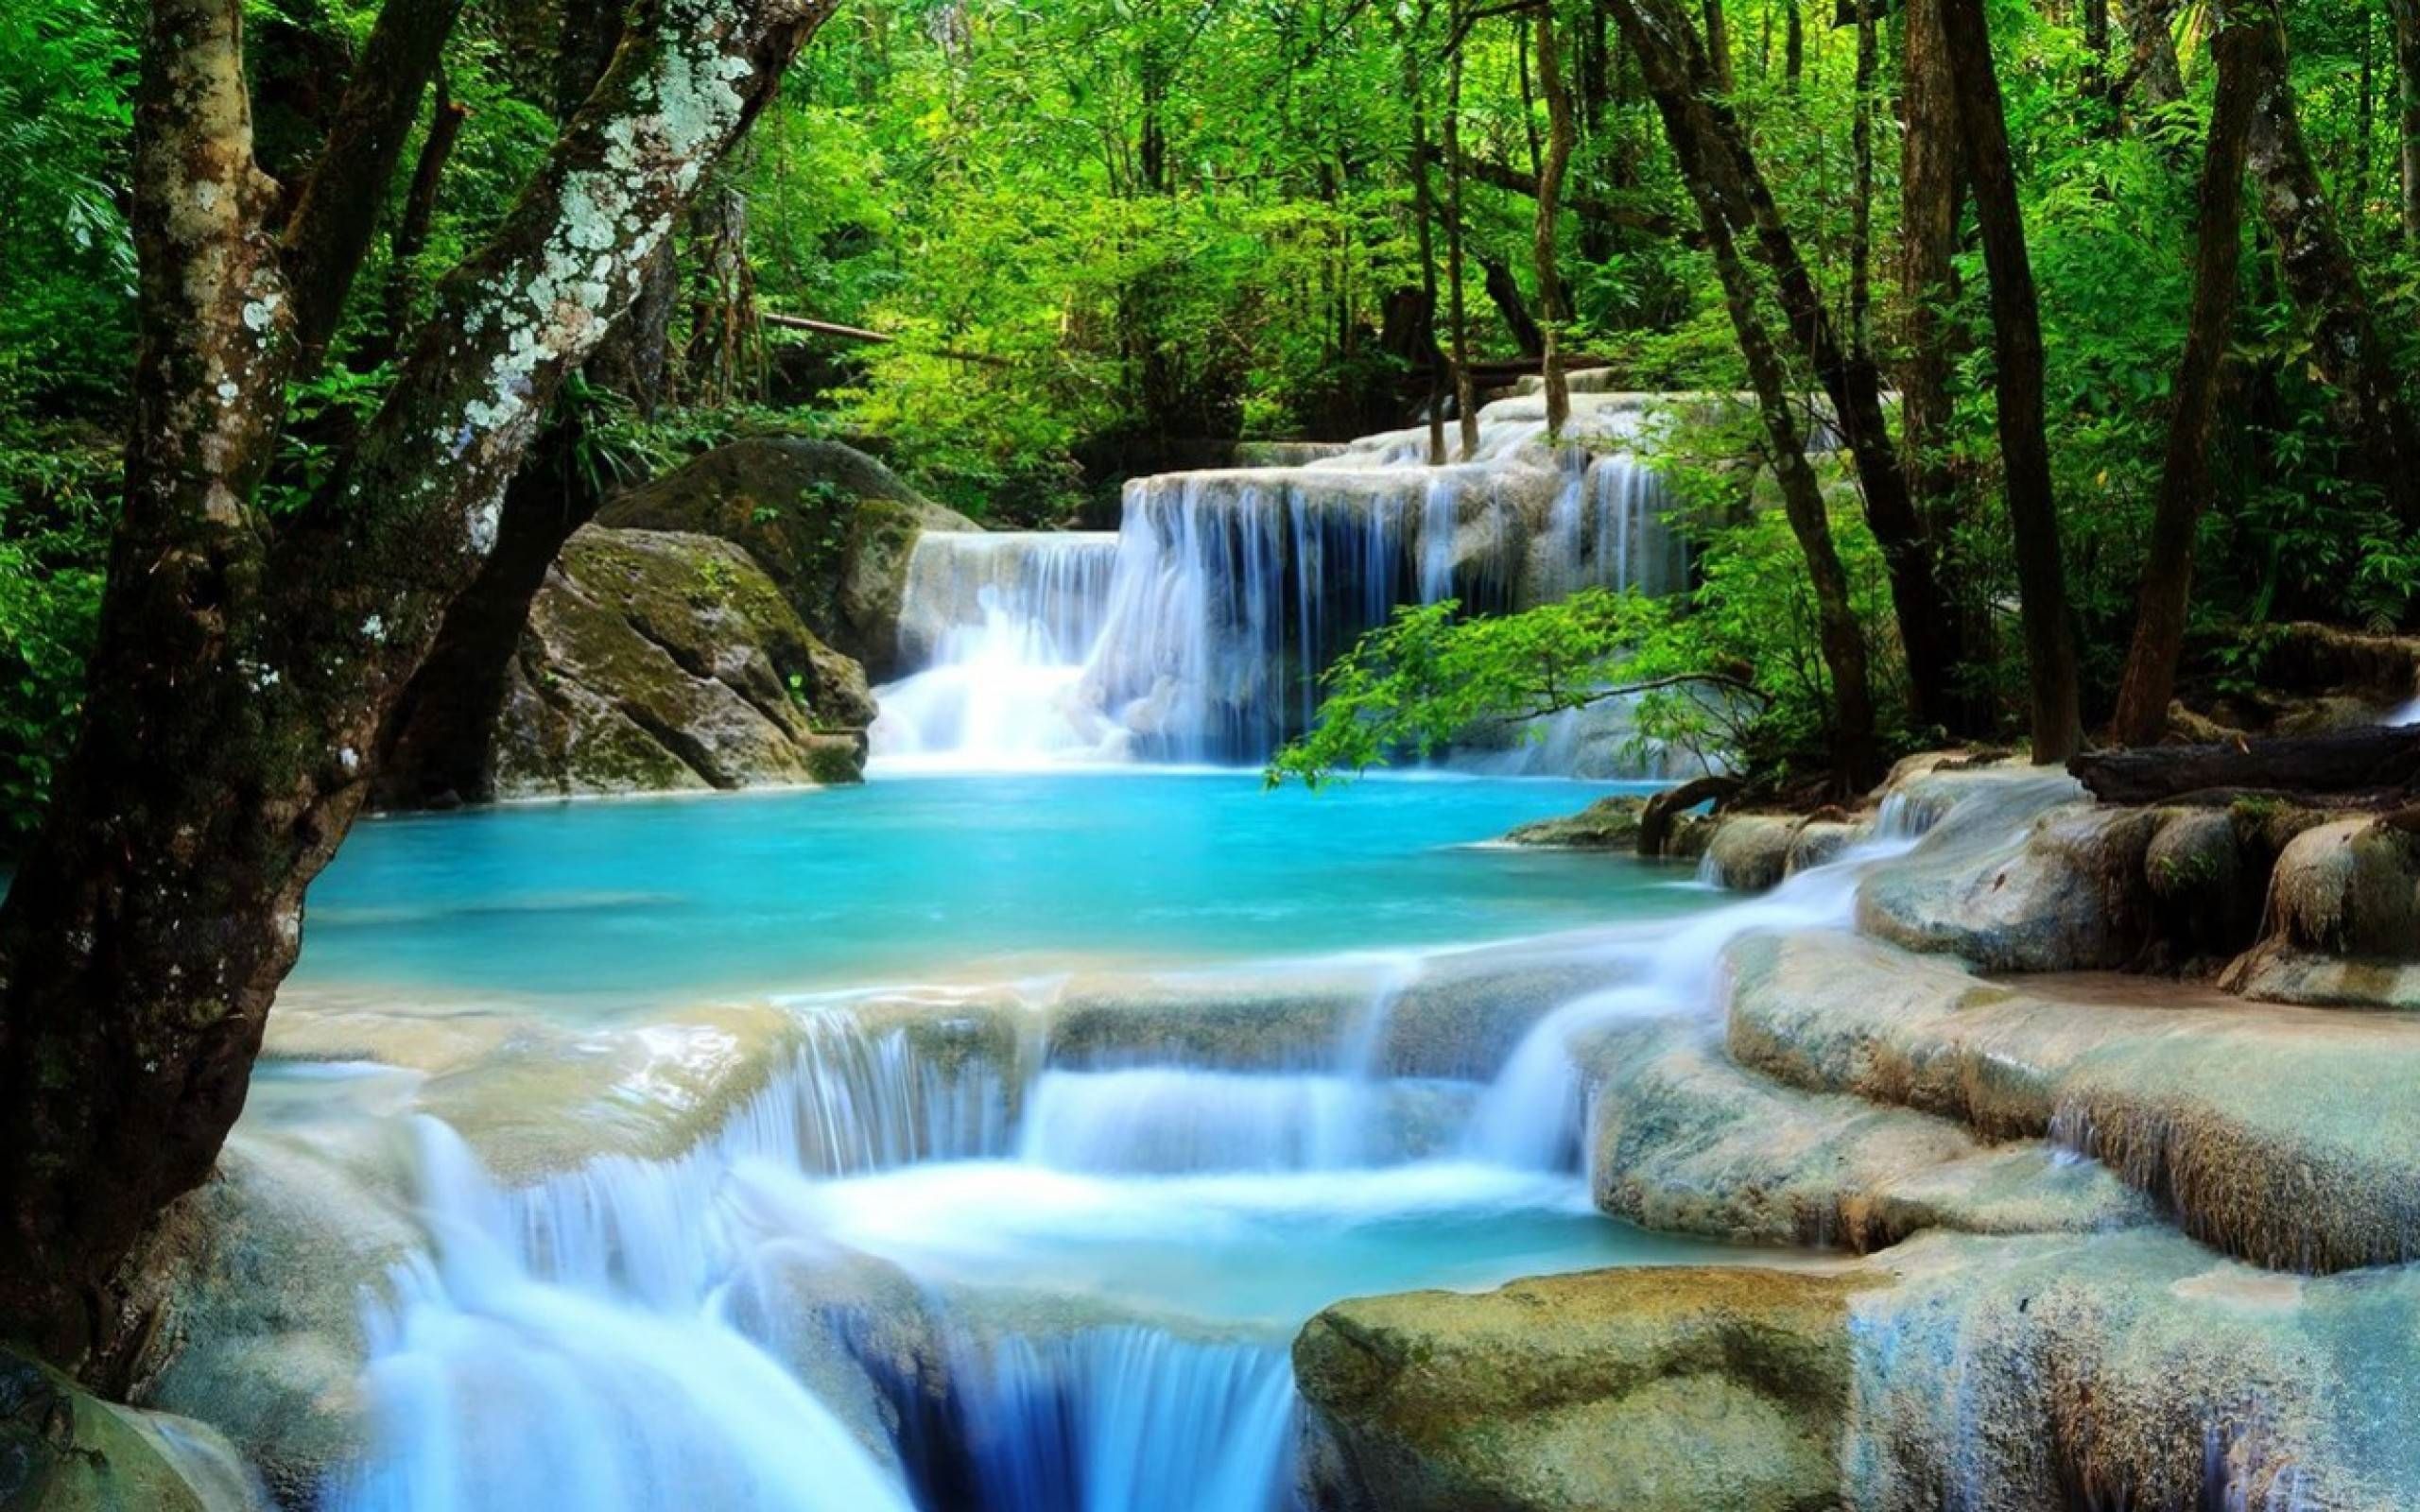 Waterfall Image For Desktop Wallpaper 2560 x 1600 px 12 MB